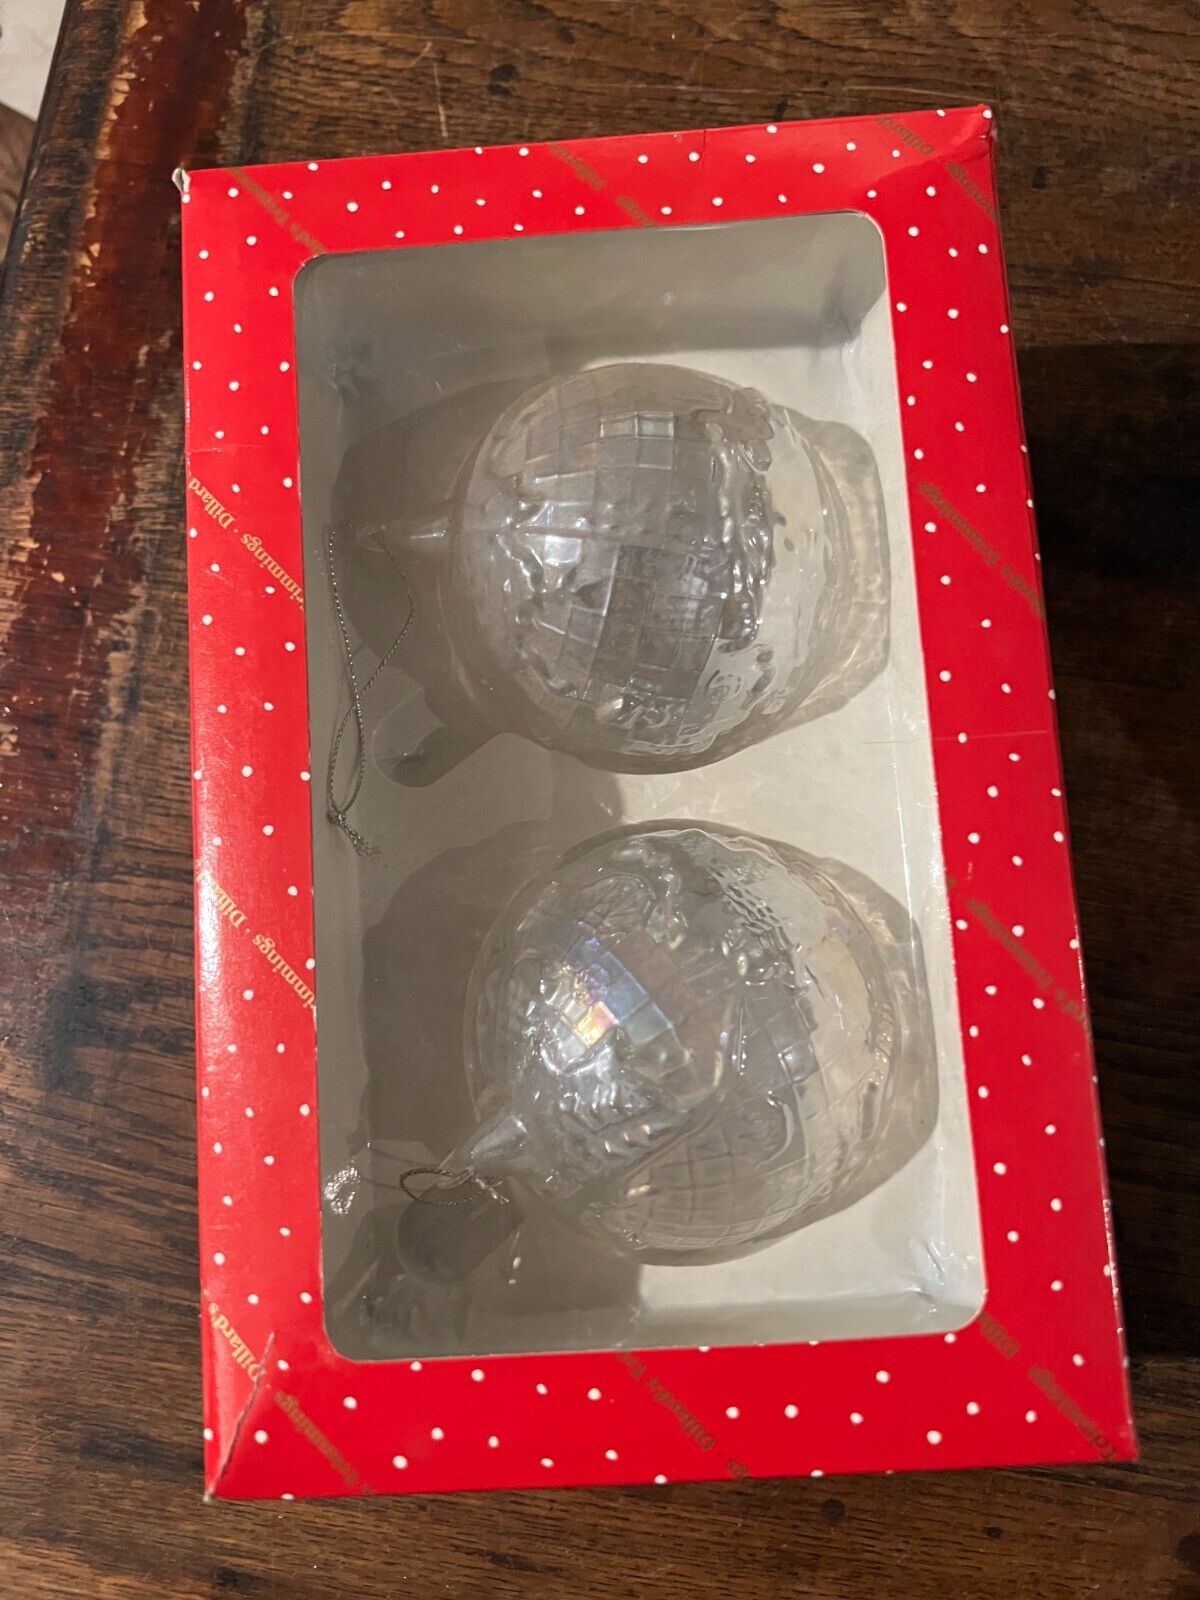 Dillards Christmas Trimmings Ornament Vintage Red Box Globes Balls